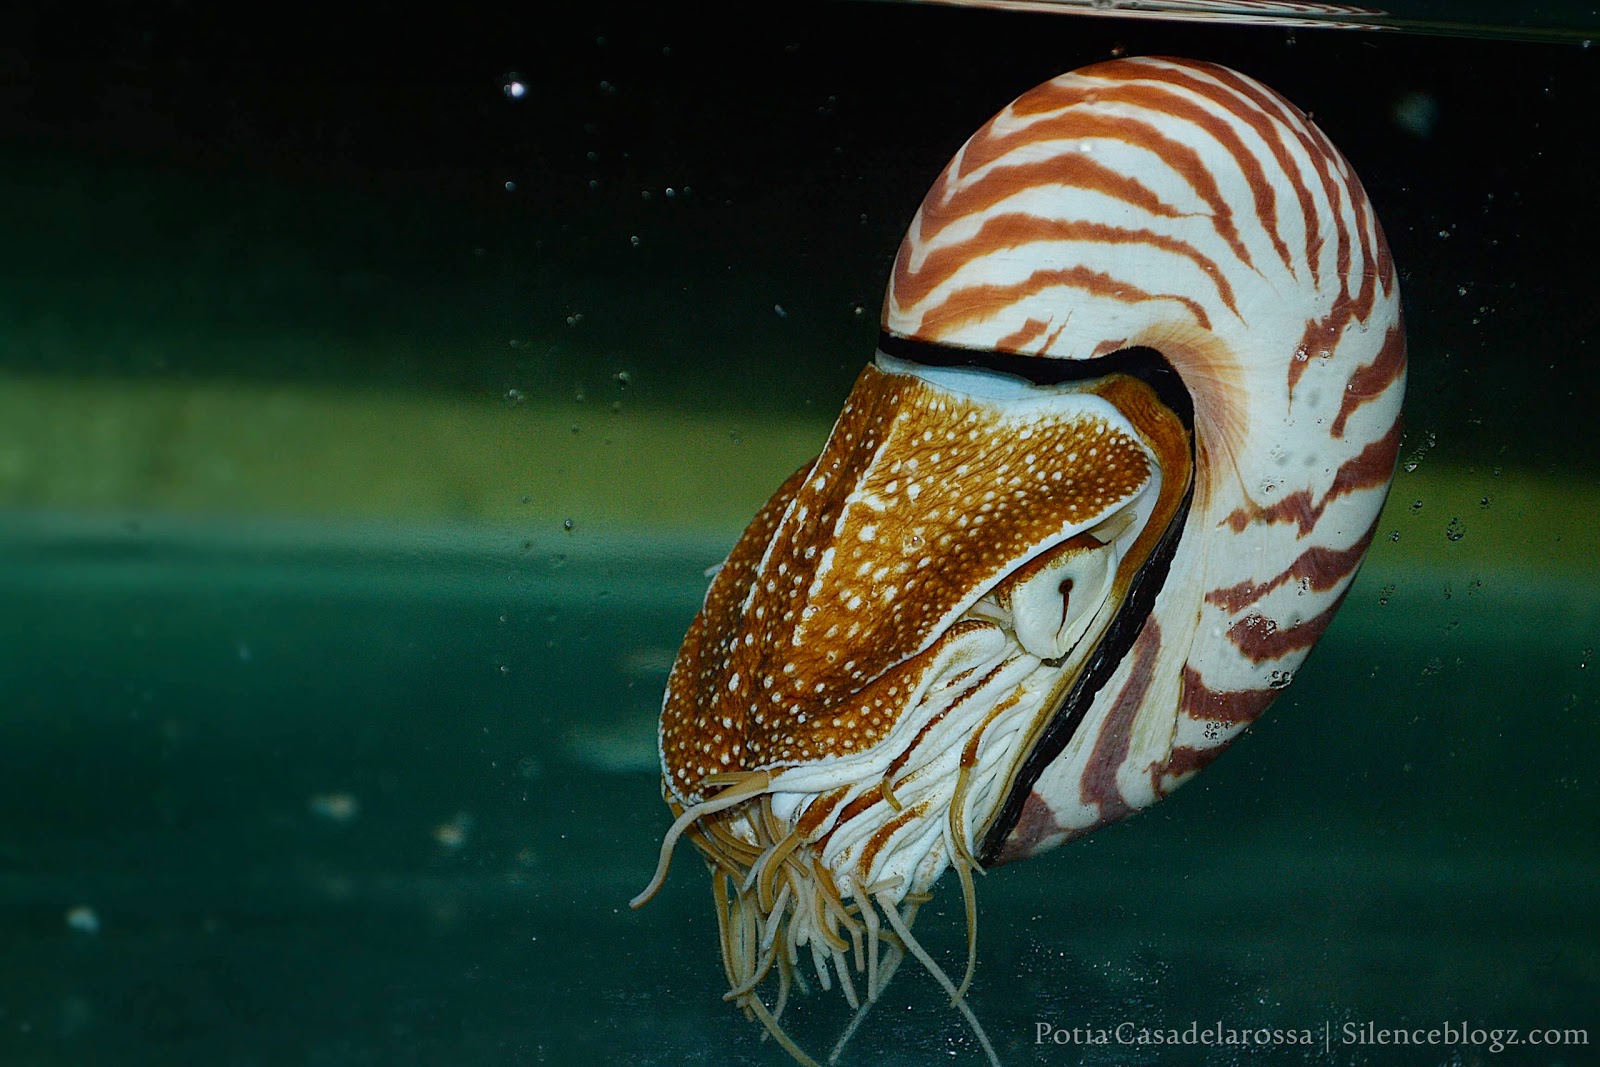 Fosil Hidup, Pearly Nautilus Hidup Jutaan Tahun